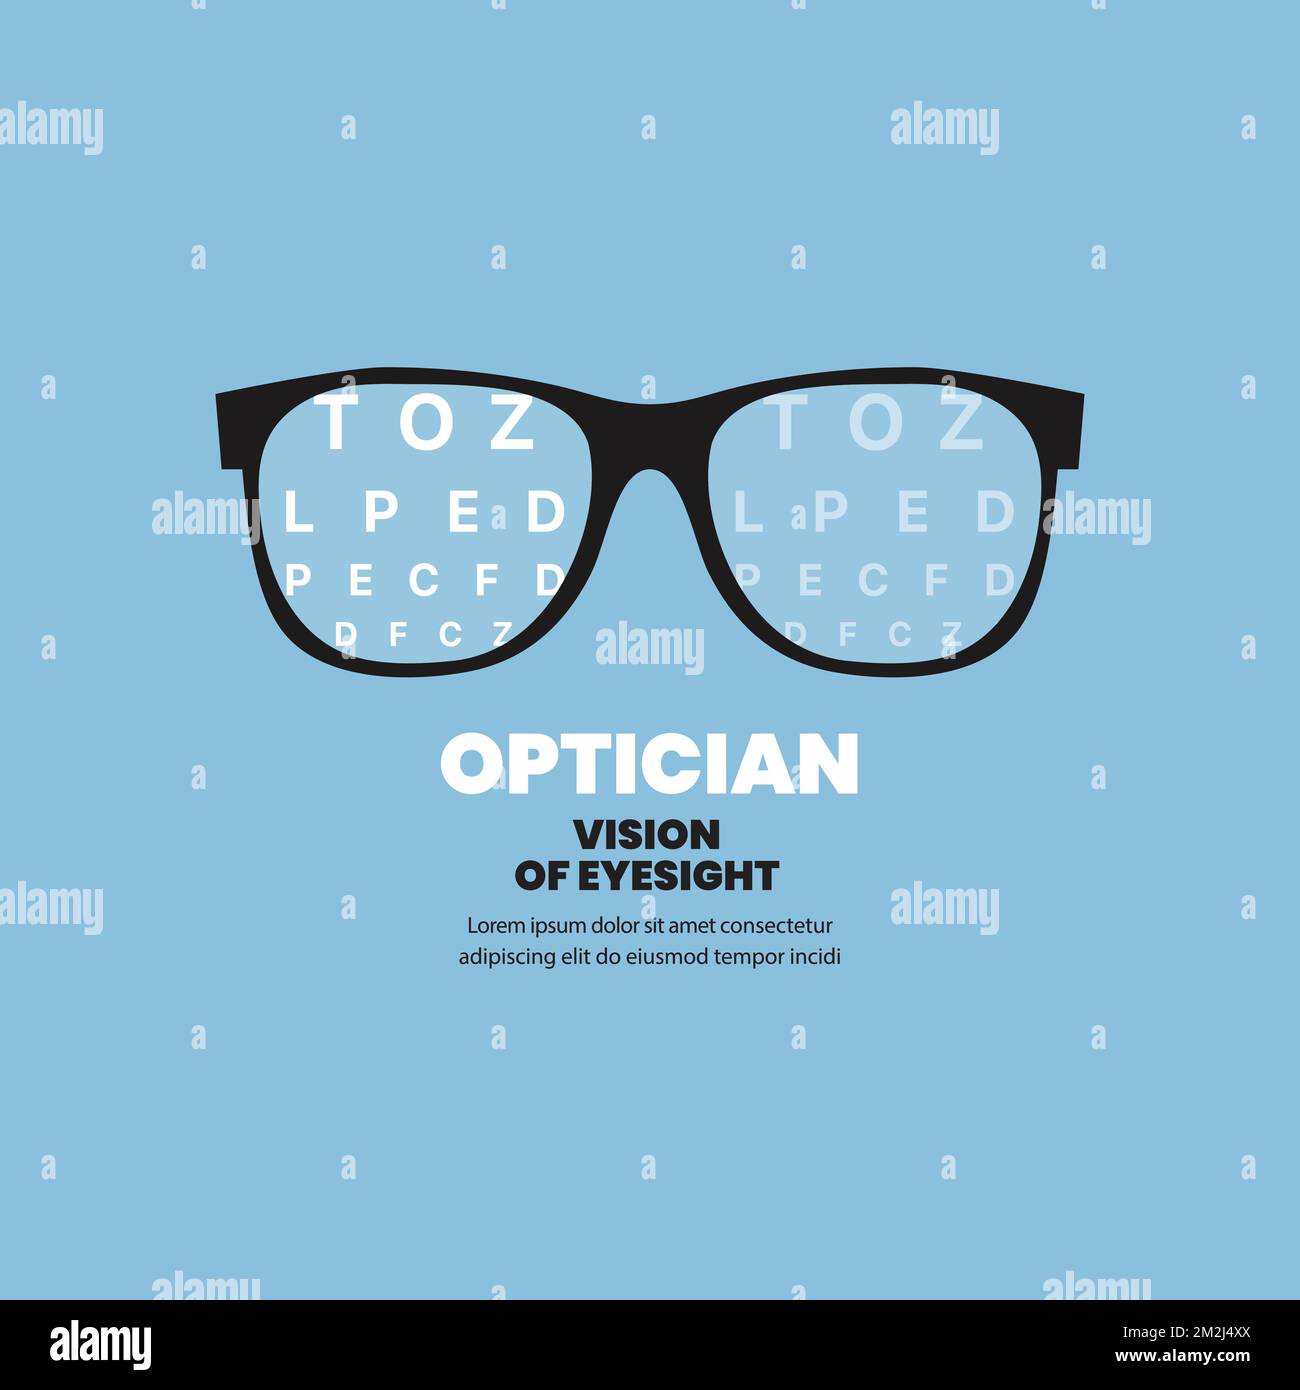 Optician Vision Of Eyesight. Vector Illustration Stock Vector